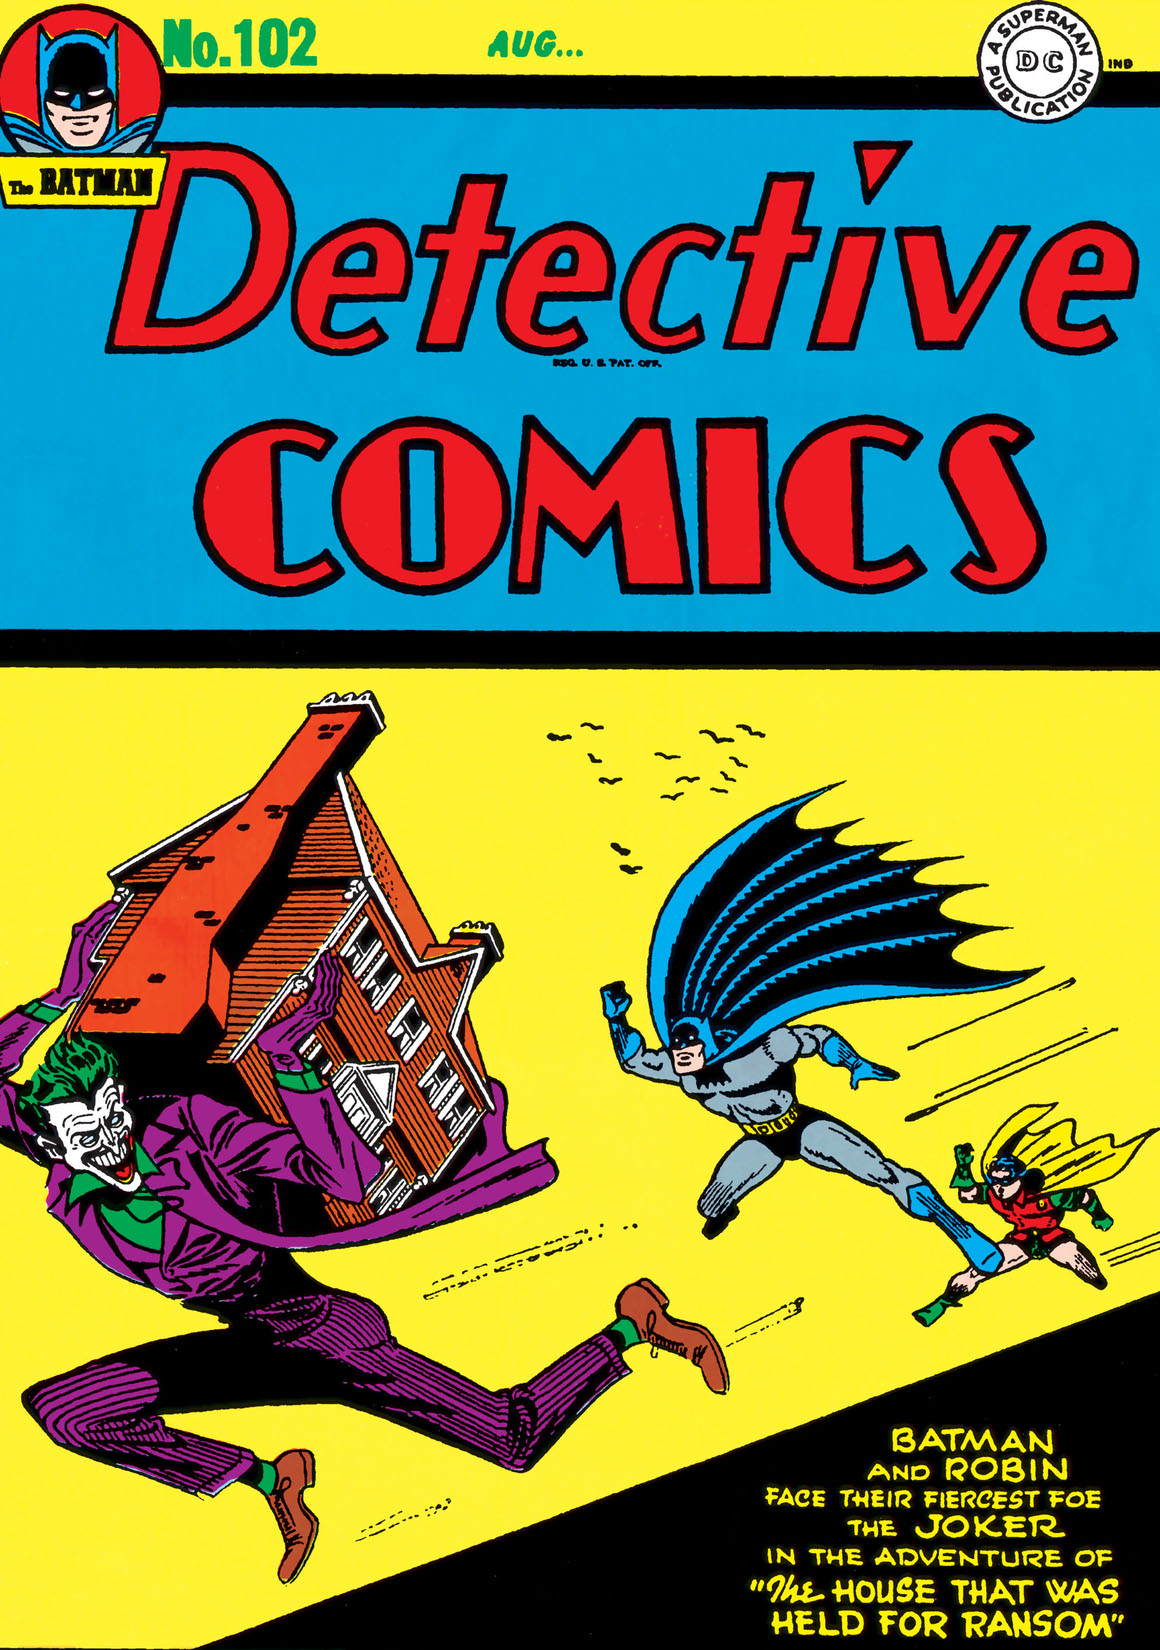 Detective Comics (1937-) #102 preview images